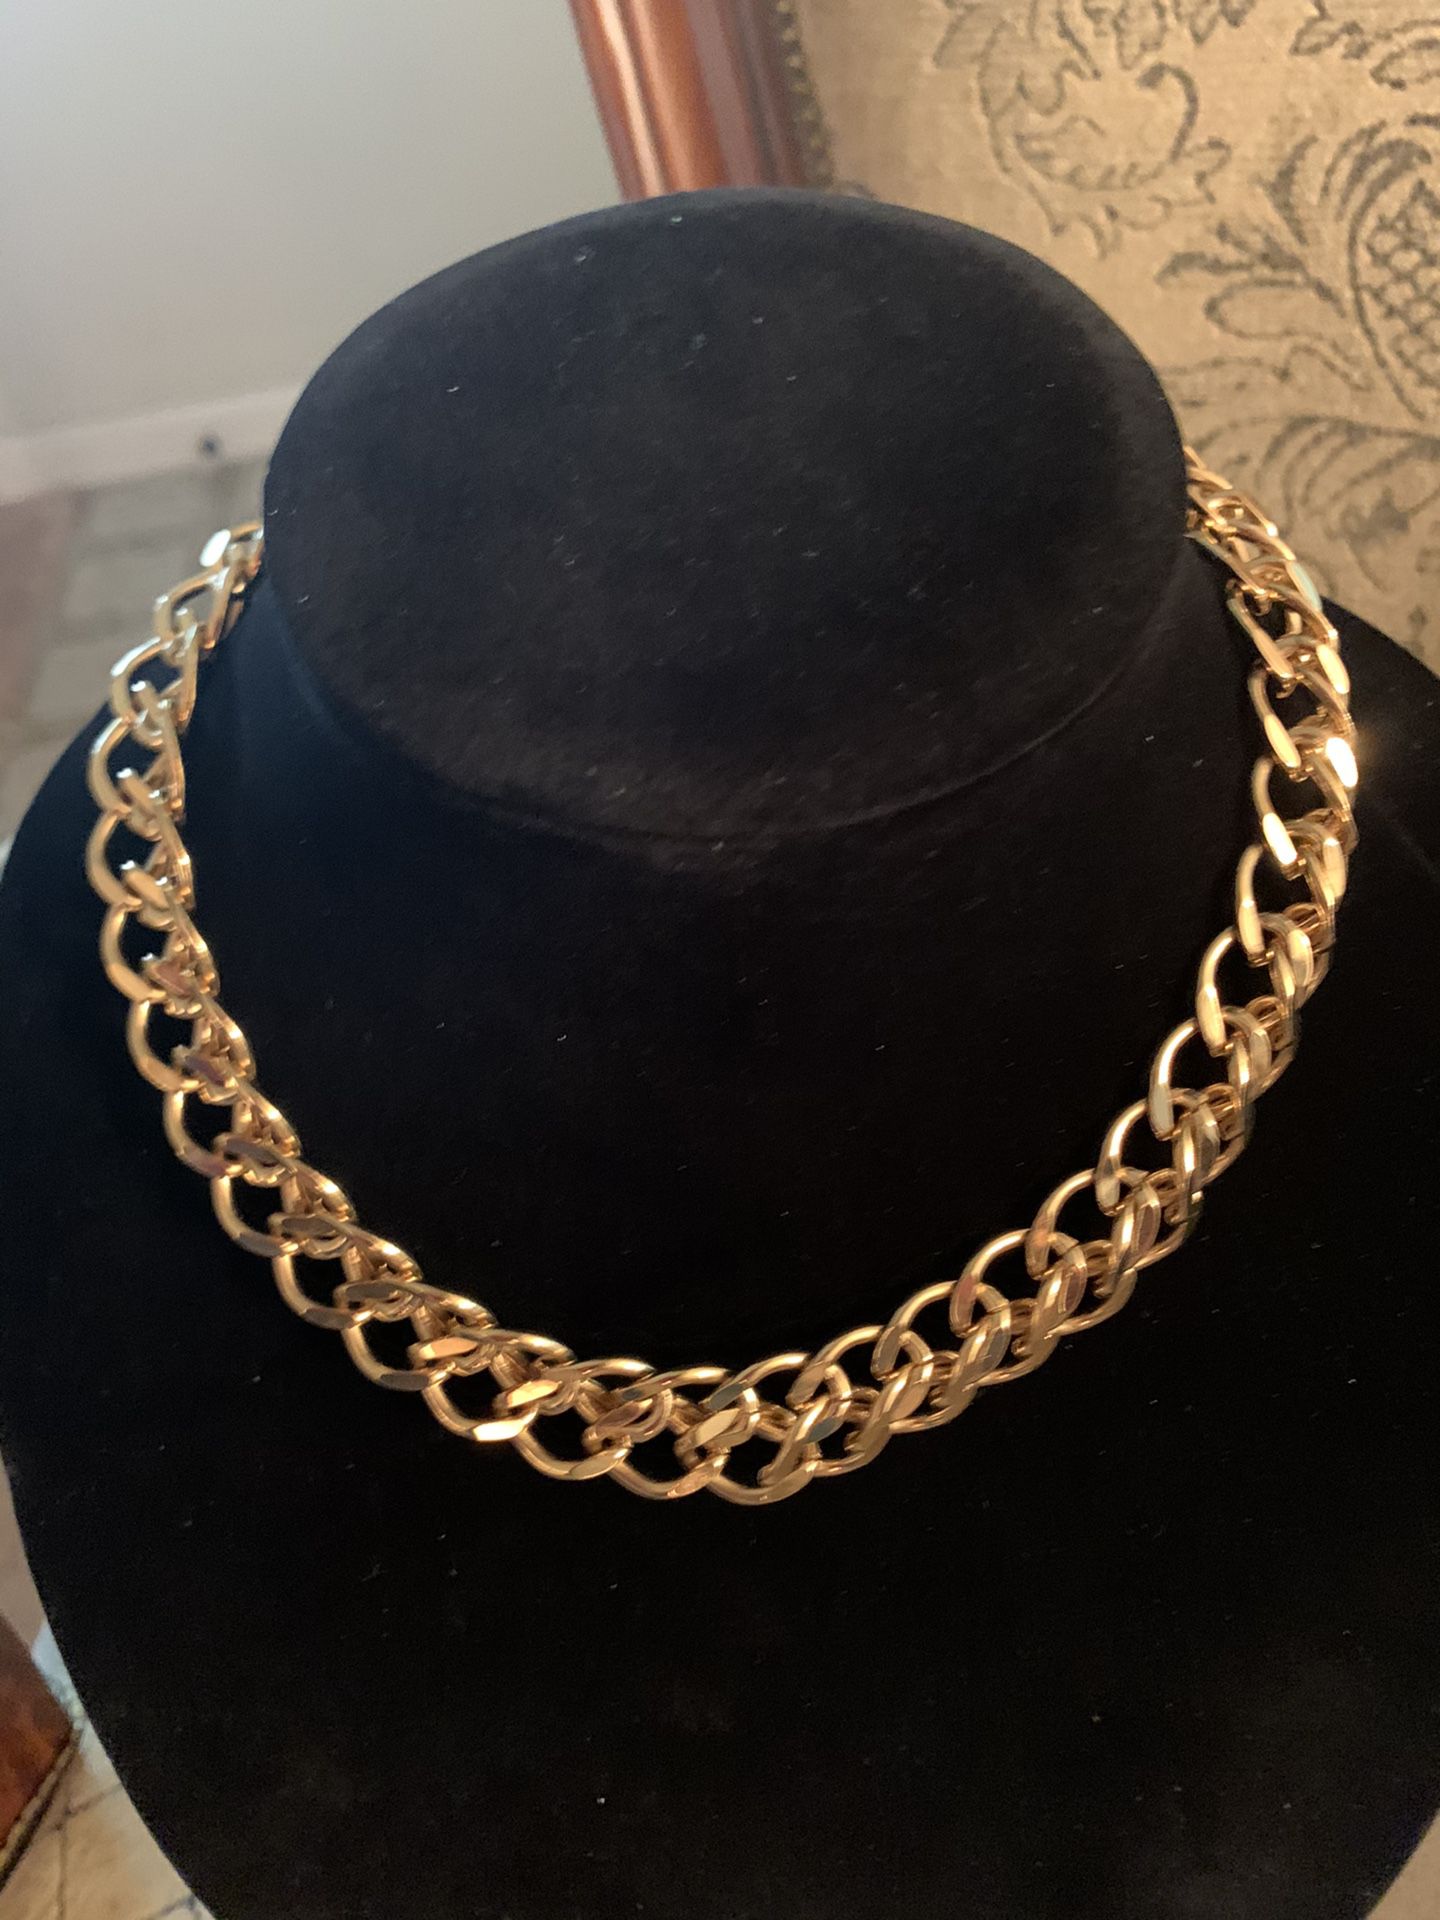 Elegant Gold Tone Choker Double Strand Necklace 